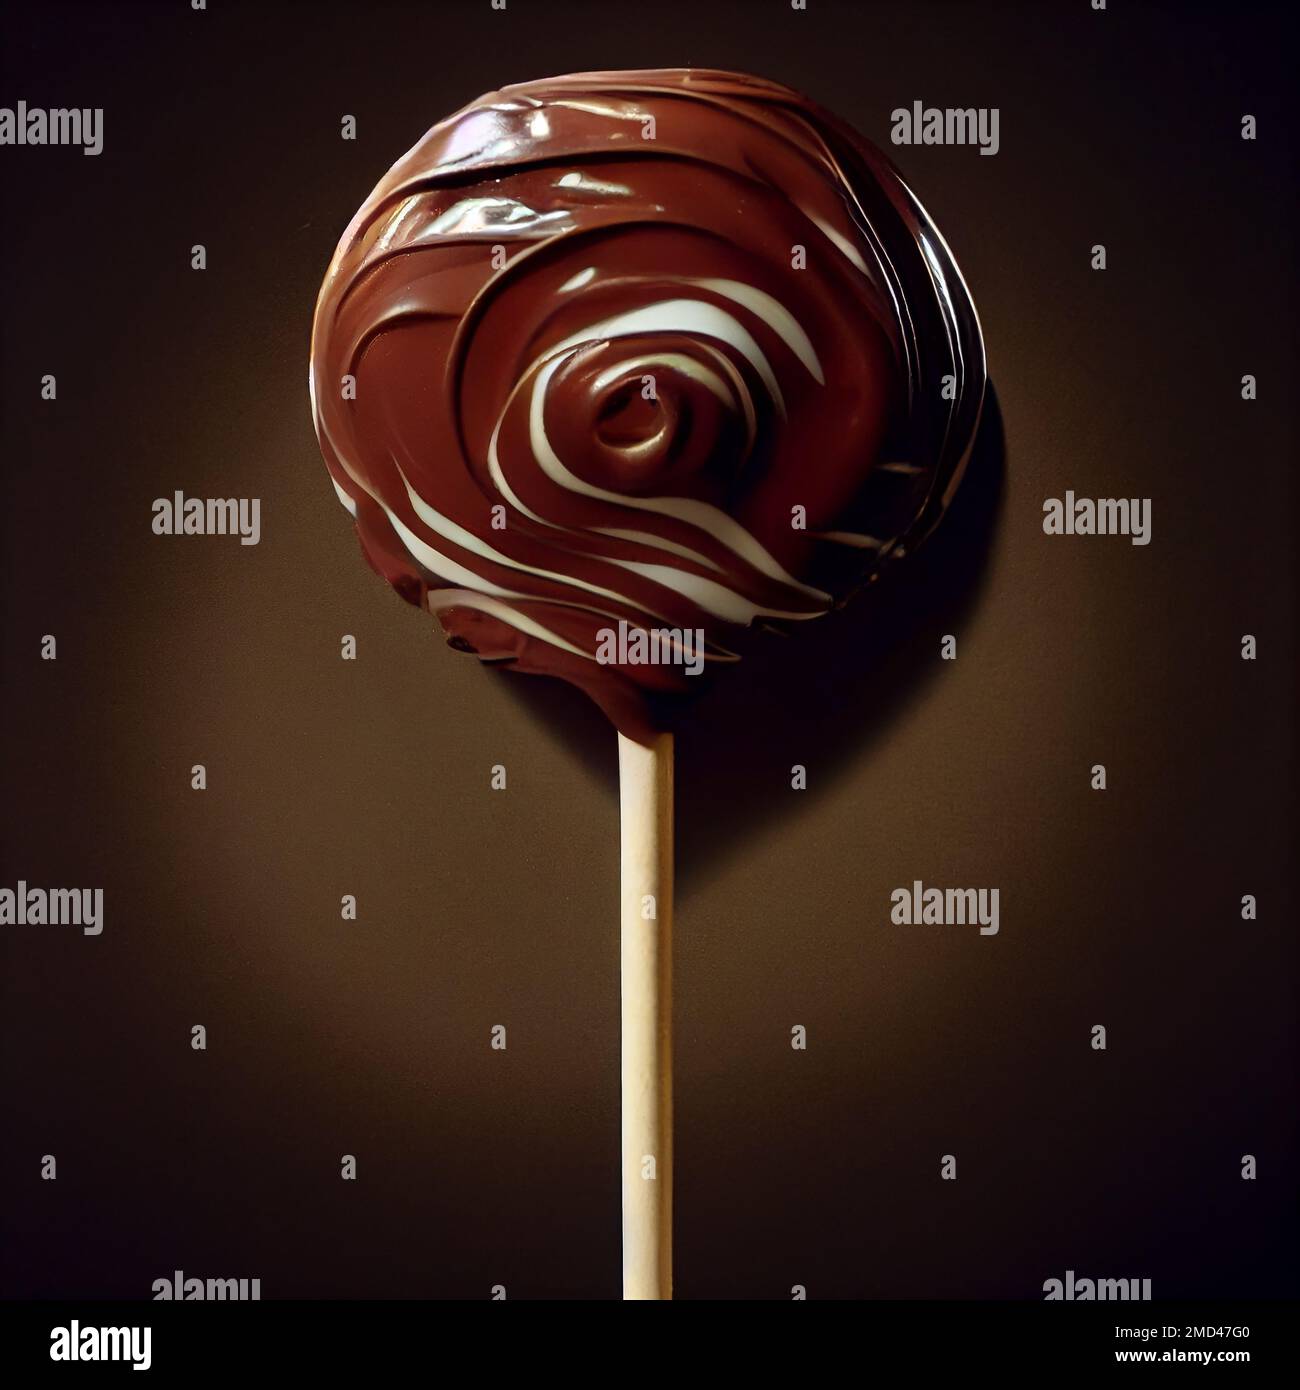 Chocolate lollipop on dark background Stock Photo